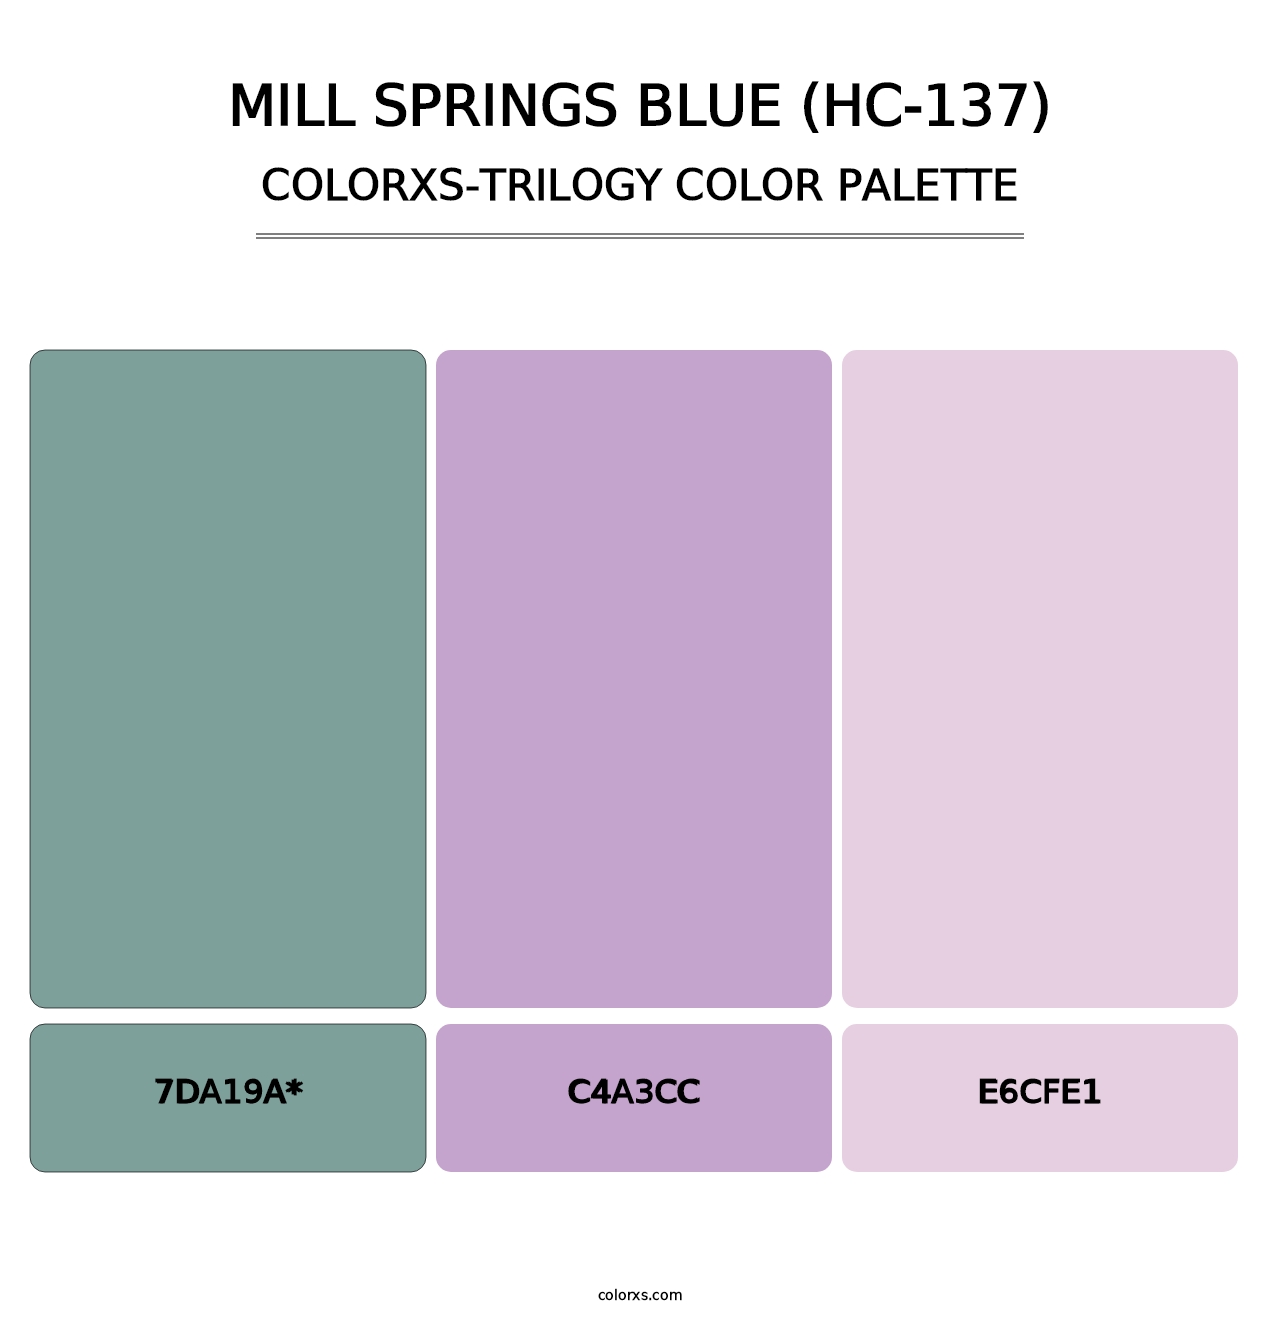 Mill Springs Blue (HC-137) - Colorxs Trilogy Palette